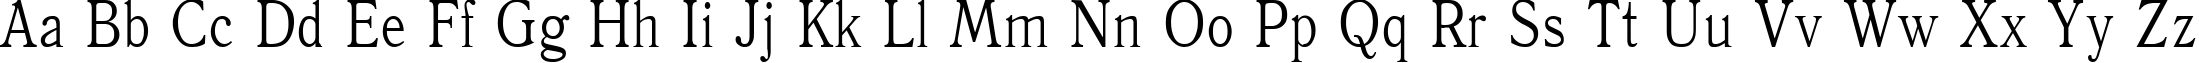 Пример написания английского алфавита шрифтом Antiqua85n